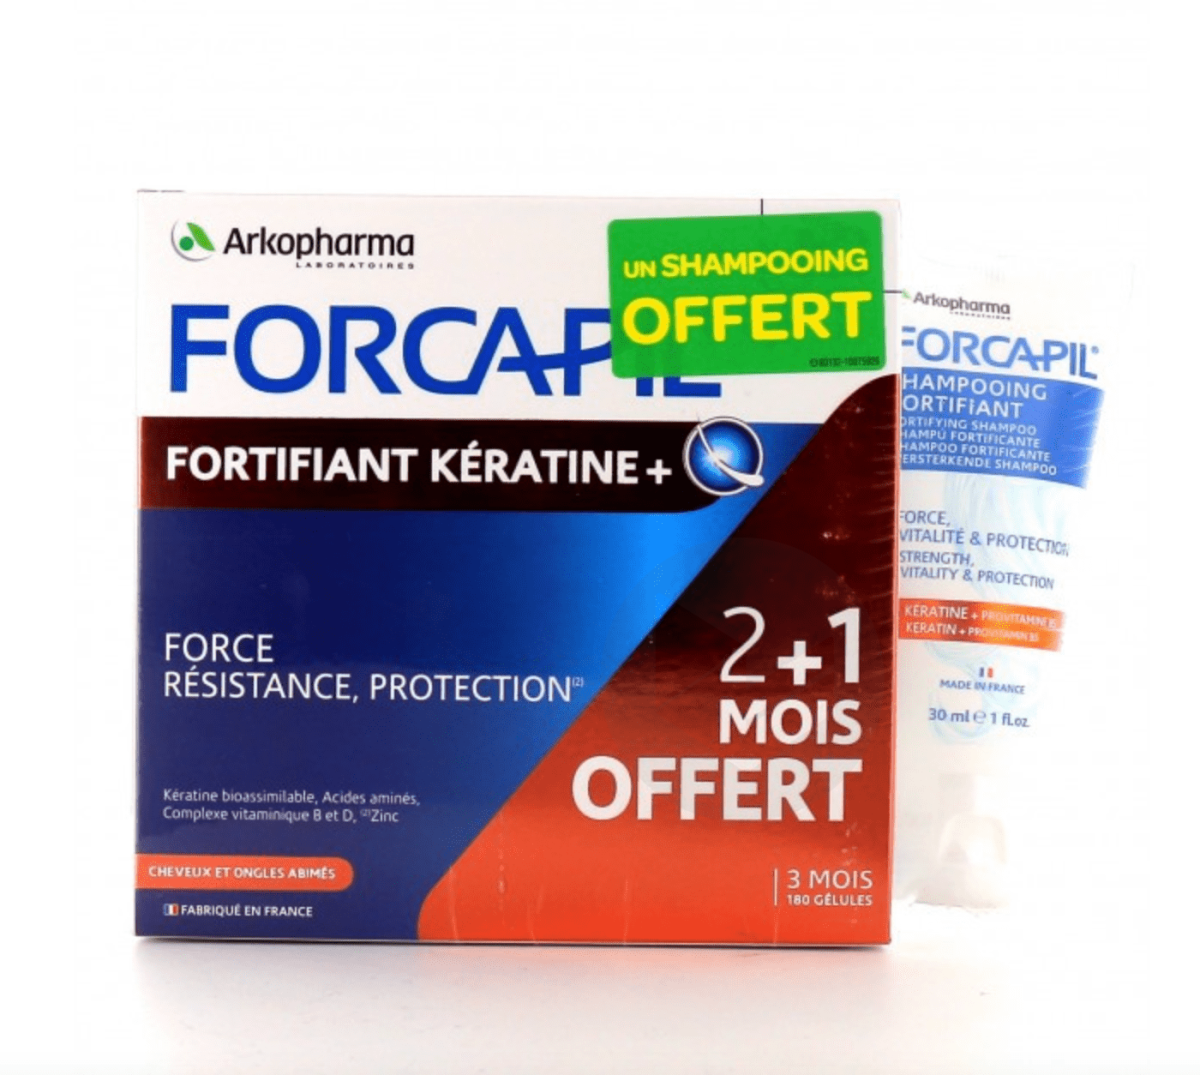 Forcapil Fortifiant+Keratine 180 gélules + Shampooing offert 30ml